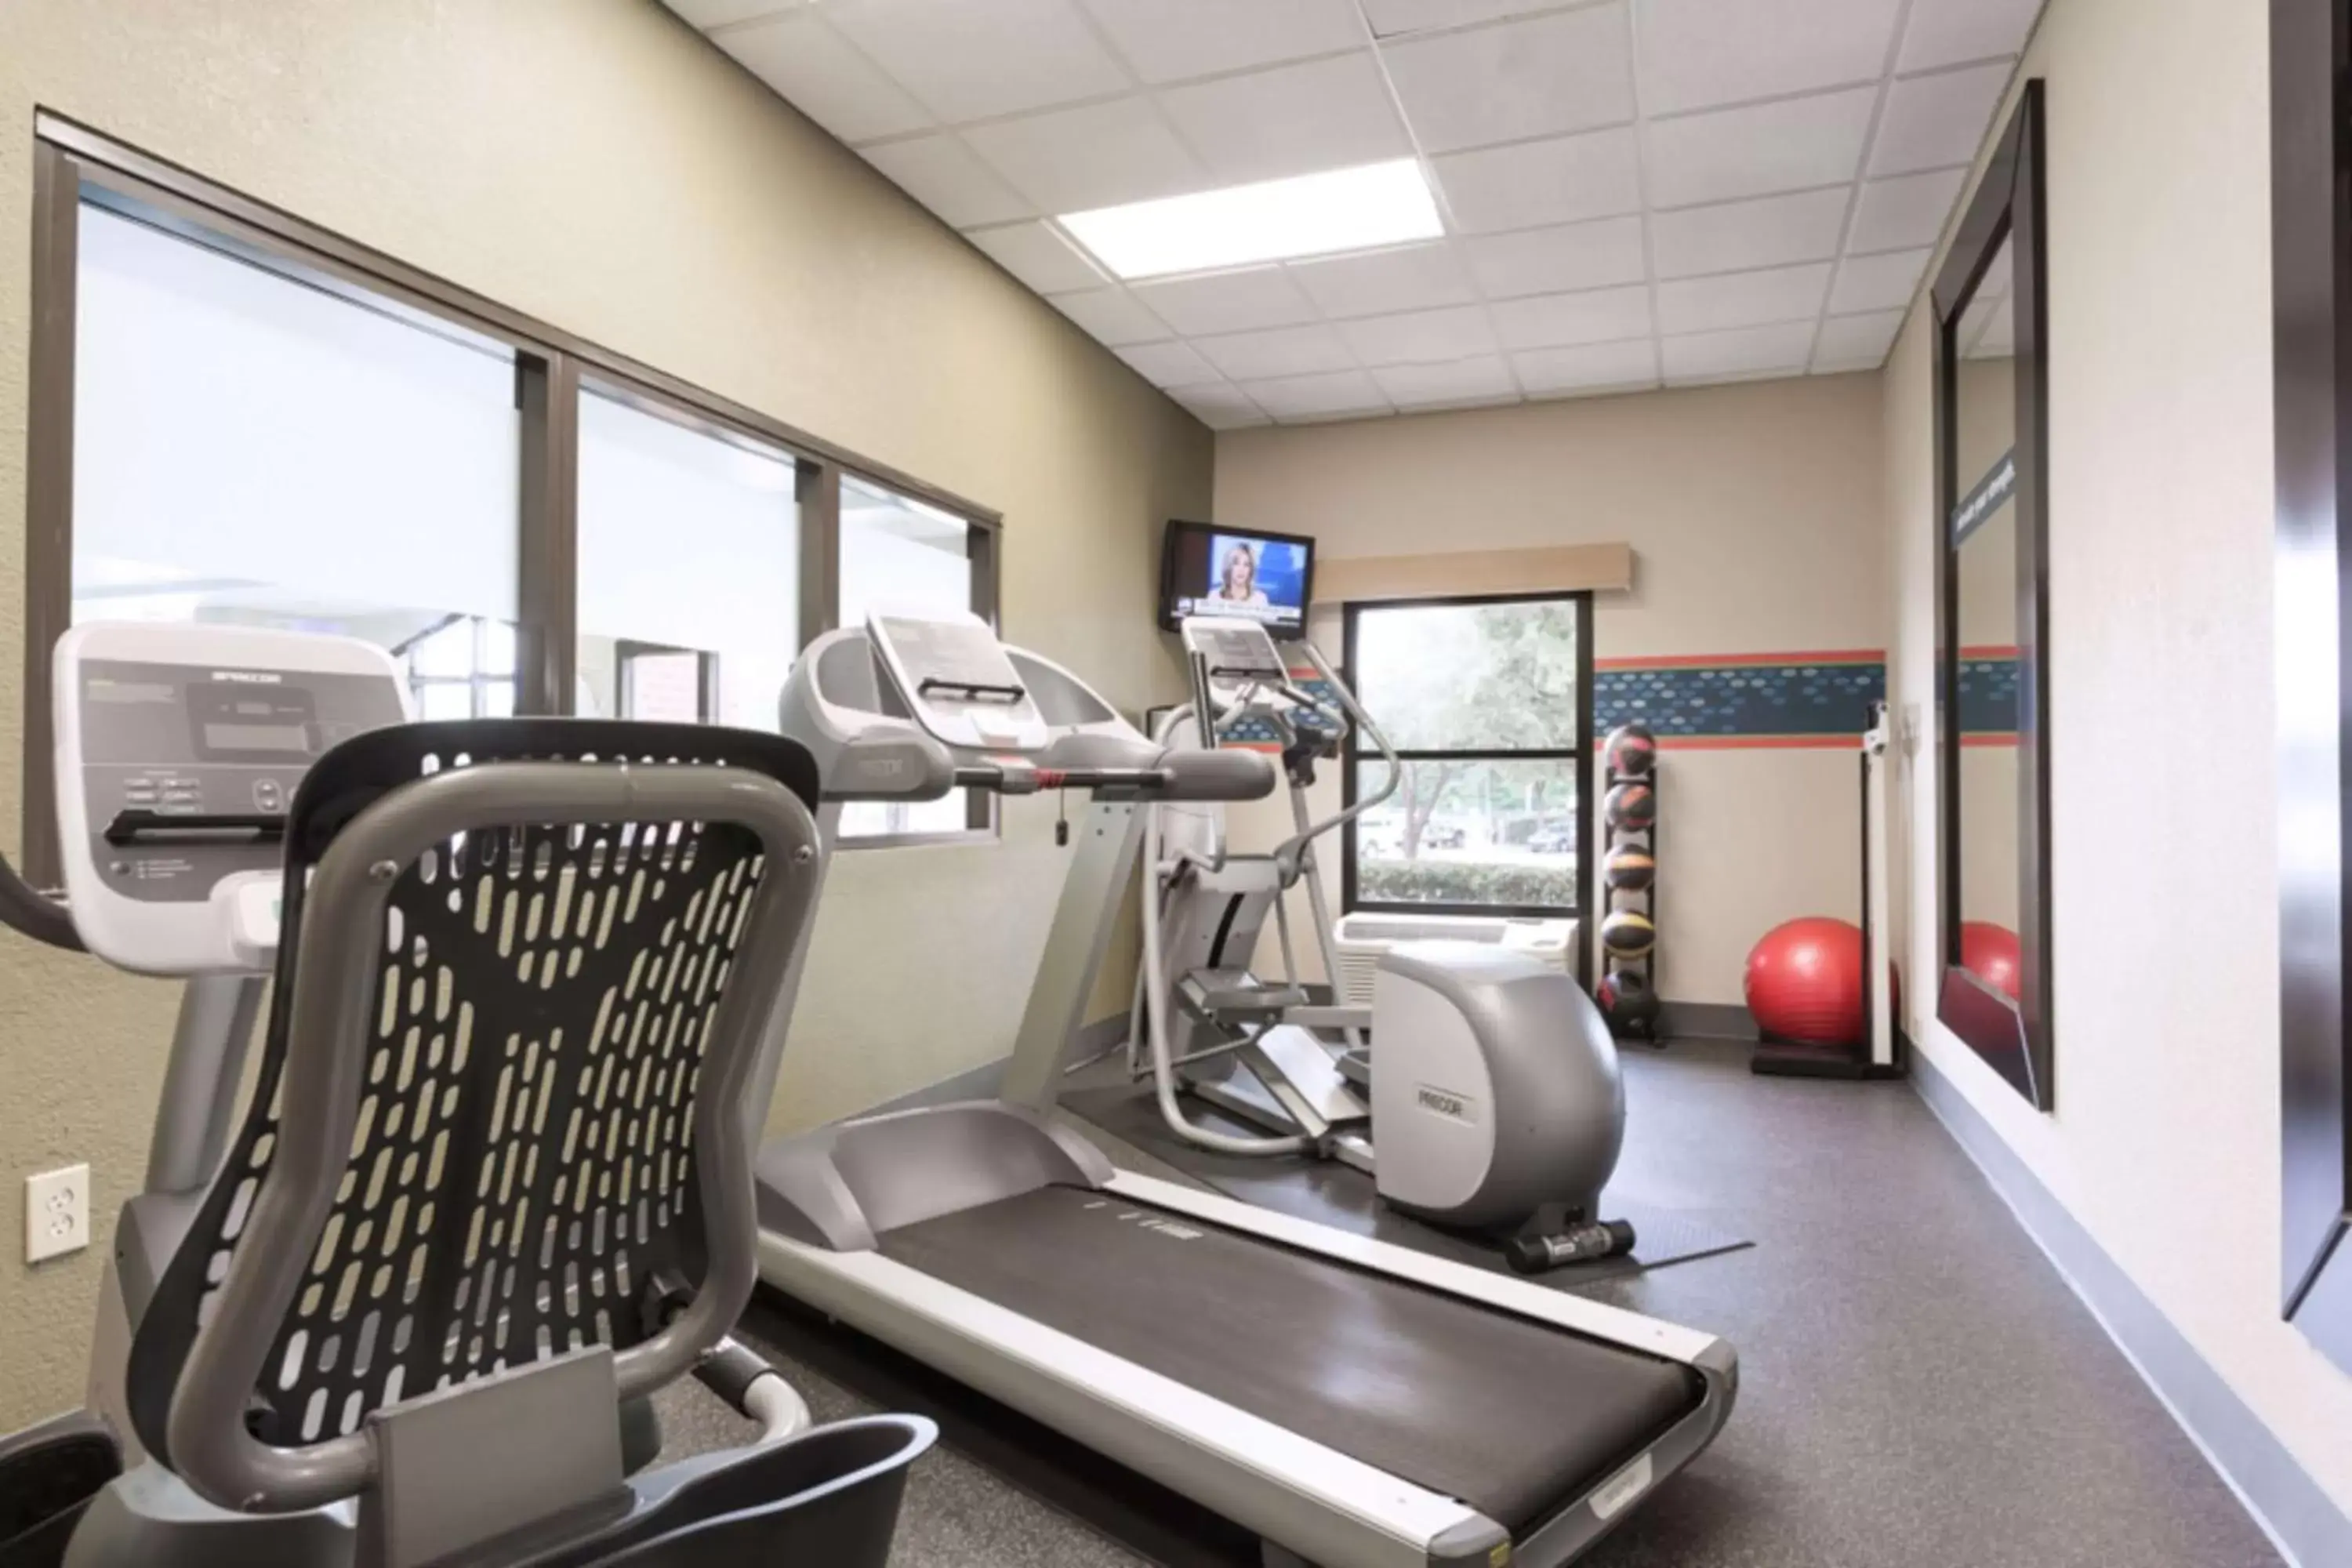 Fitness centre/facilities, Fitness Center/Facilities in Hampton Inn & Suites Dallas DFW Airport North Grapevine